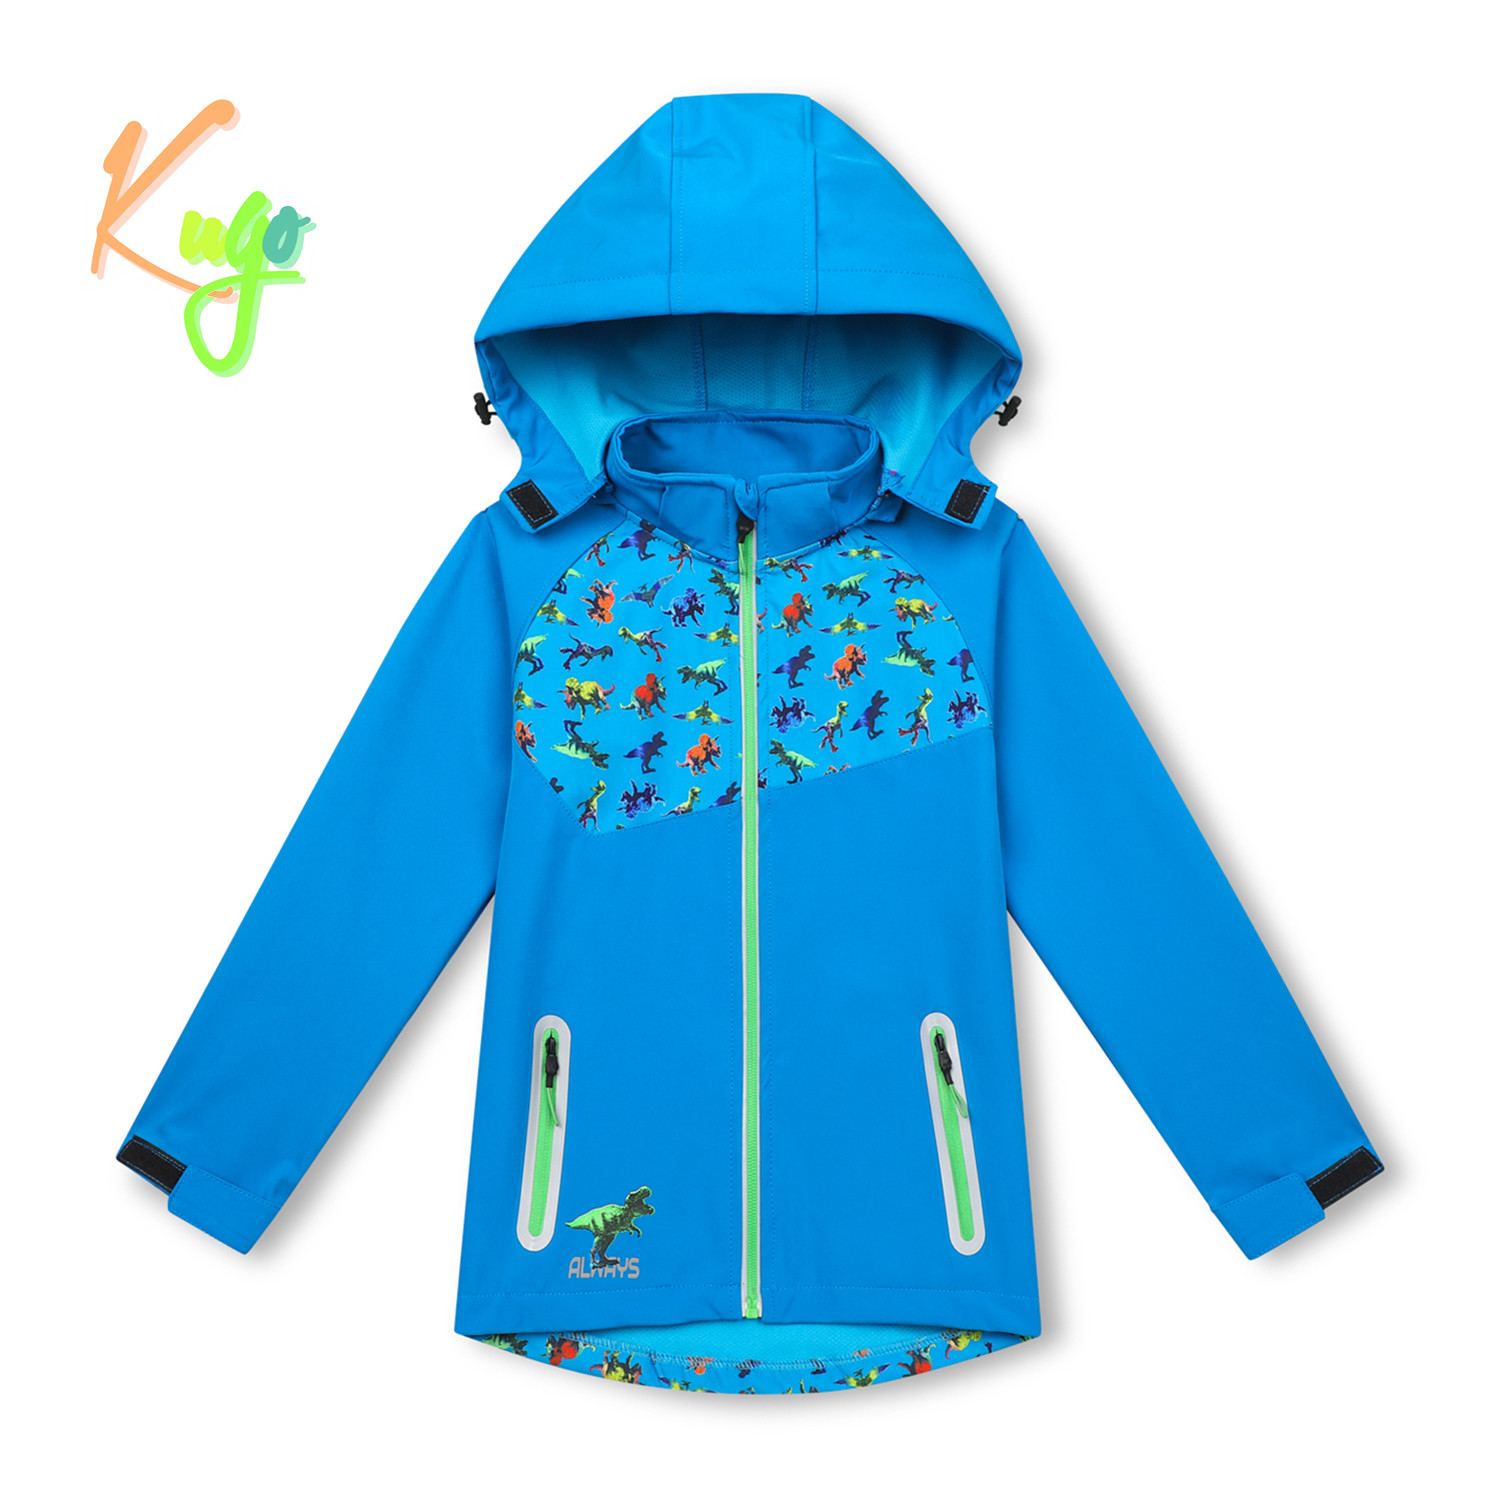 Chlapecká softshellová bunda - KUGO HK3123, modrá Barva: Modrá, Velikost: 104